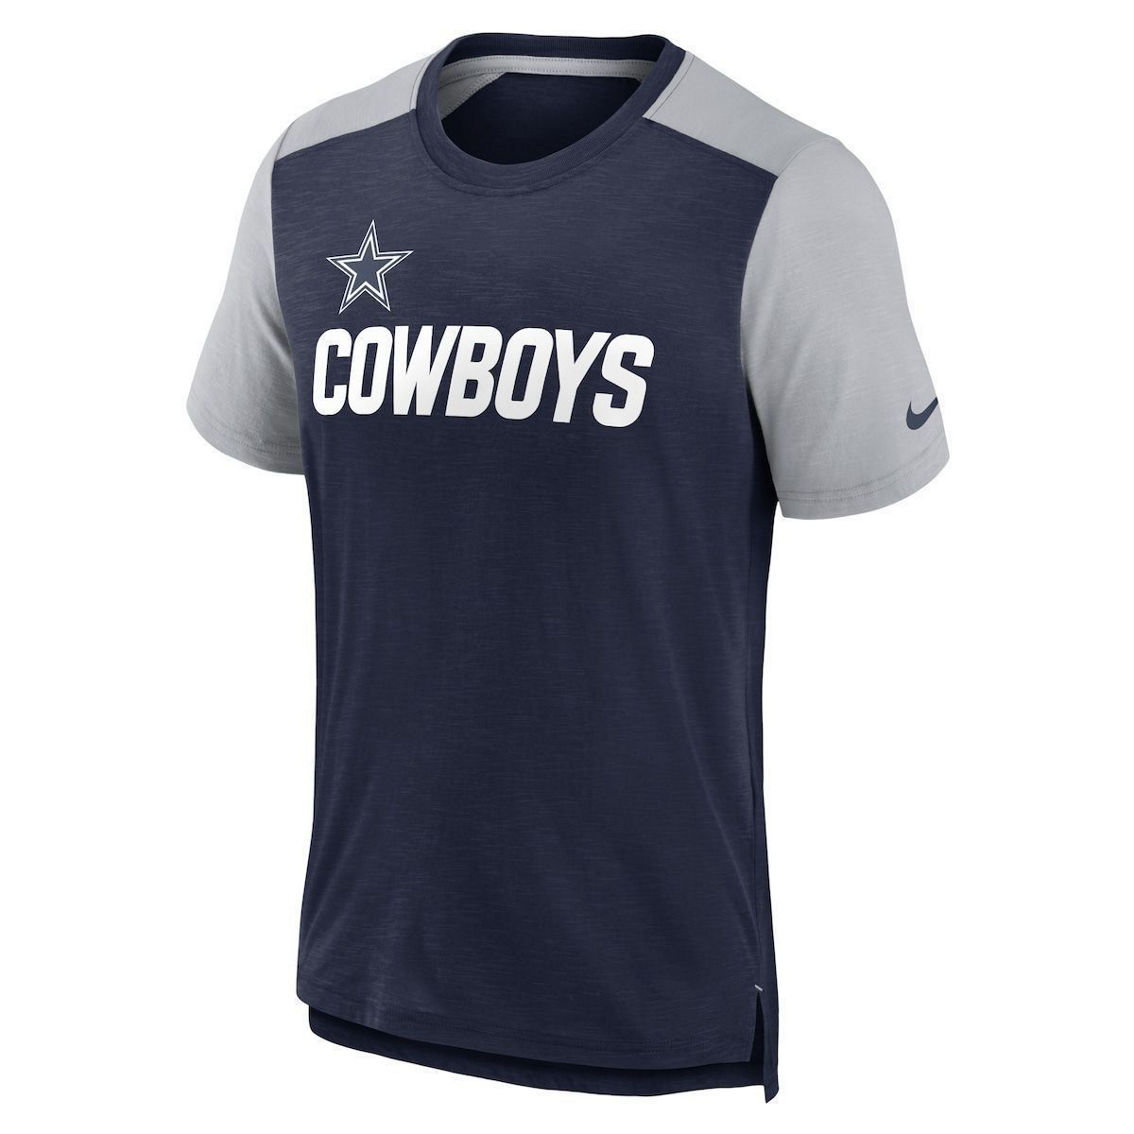 Men's Nike Heathered Navy/Heathered Gray Dallas Cowboys Color Block Team Name T-Shirt - Image 3 of 4